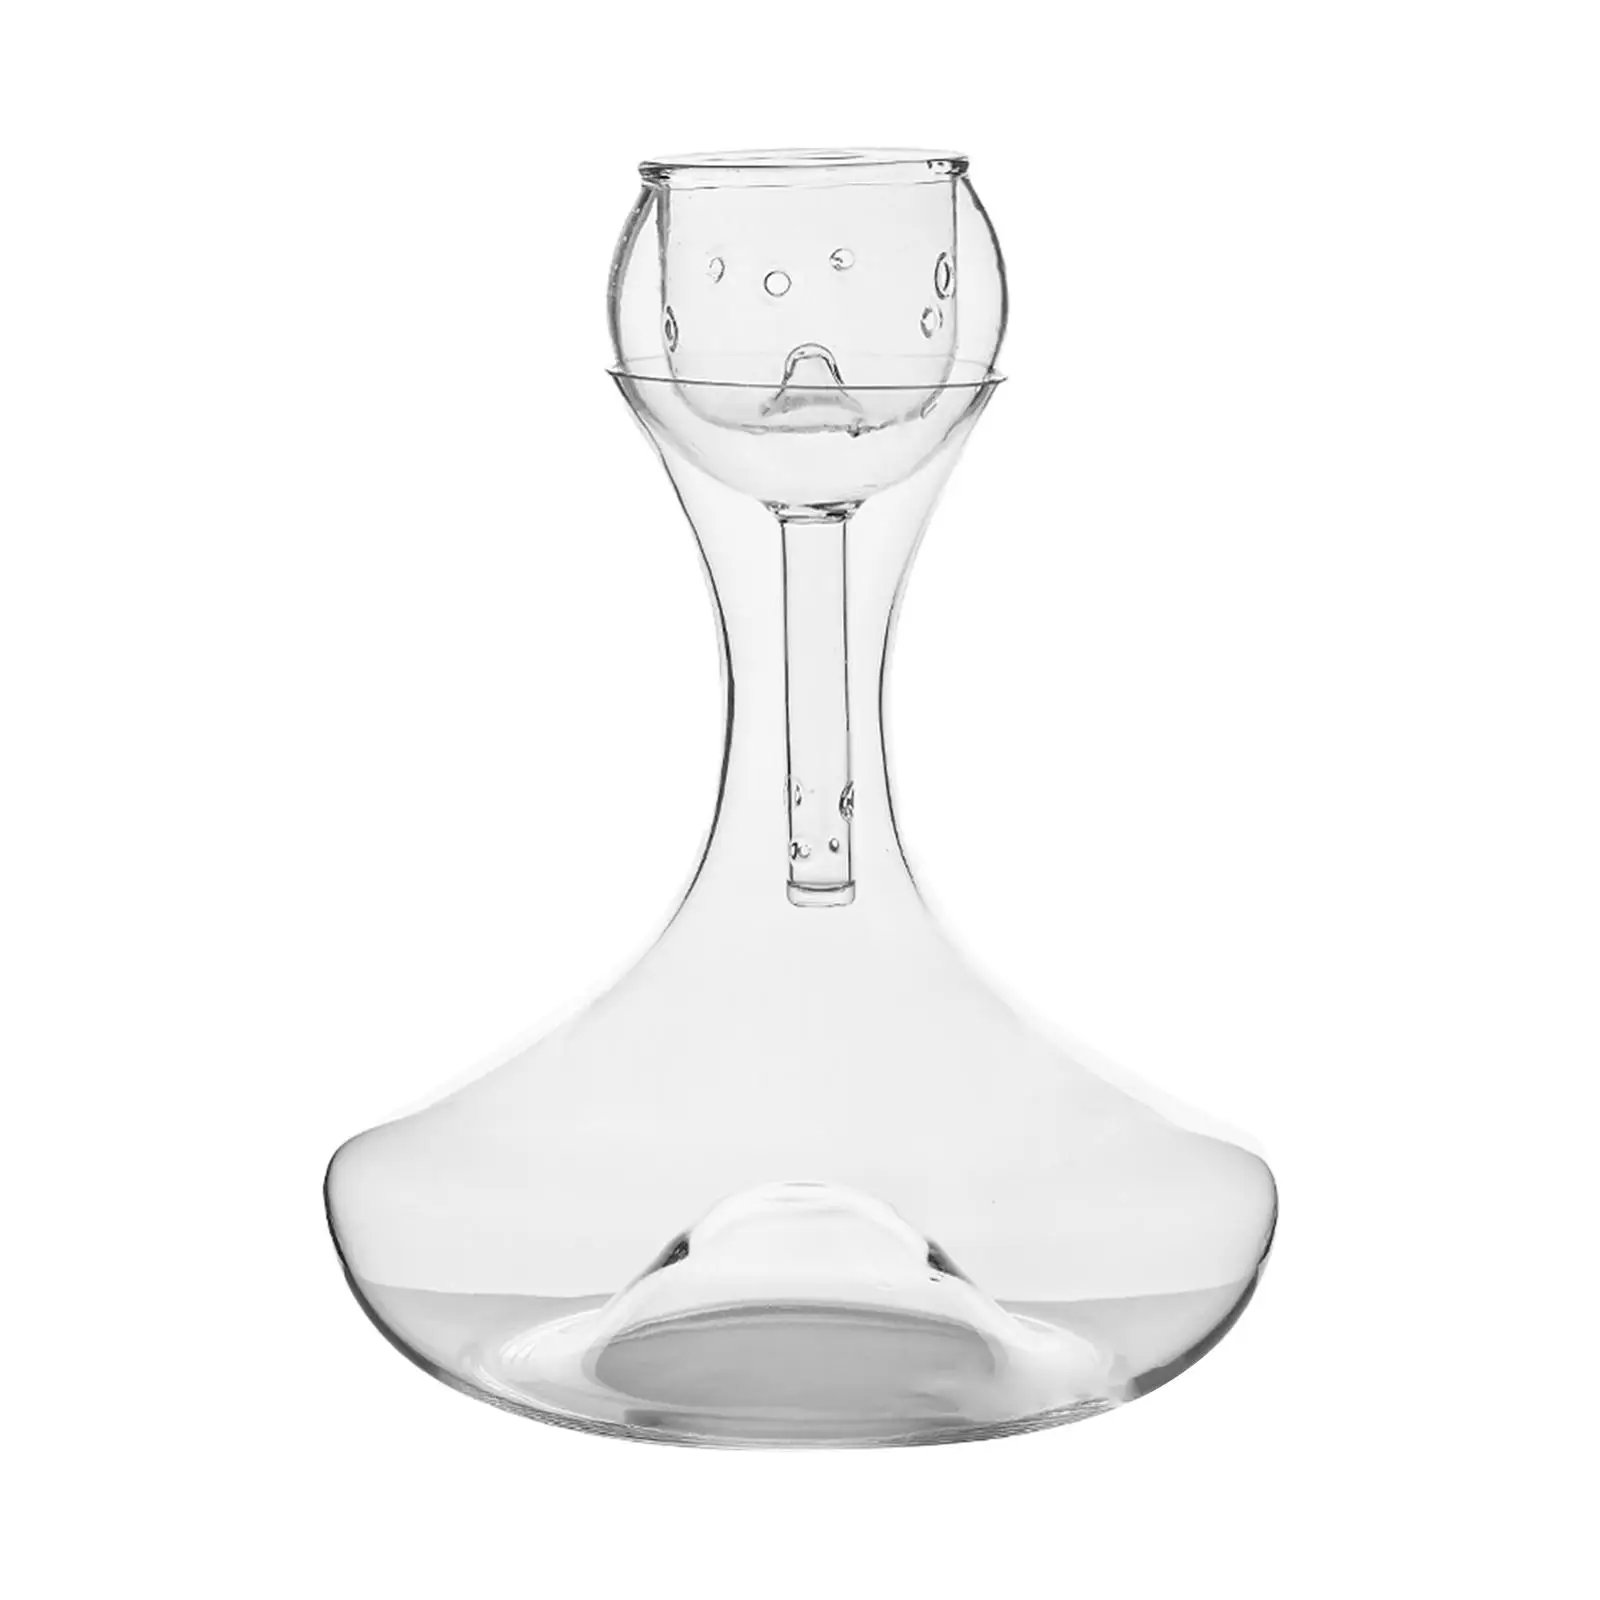 1800ml Glass Decanter Red Wine Kettle Art Glassware Handmade Spout Decanter for Restaurant Kitchen Desktop Dining Room Party